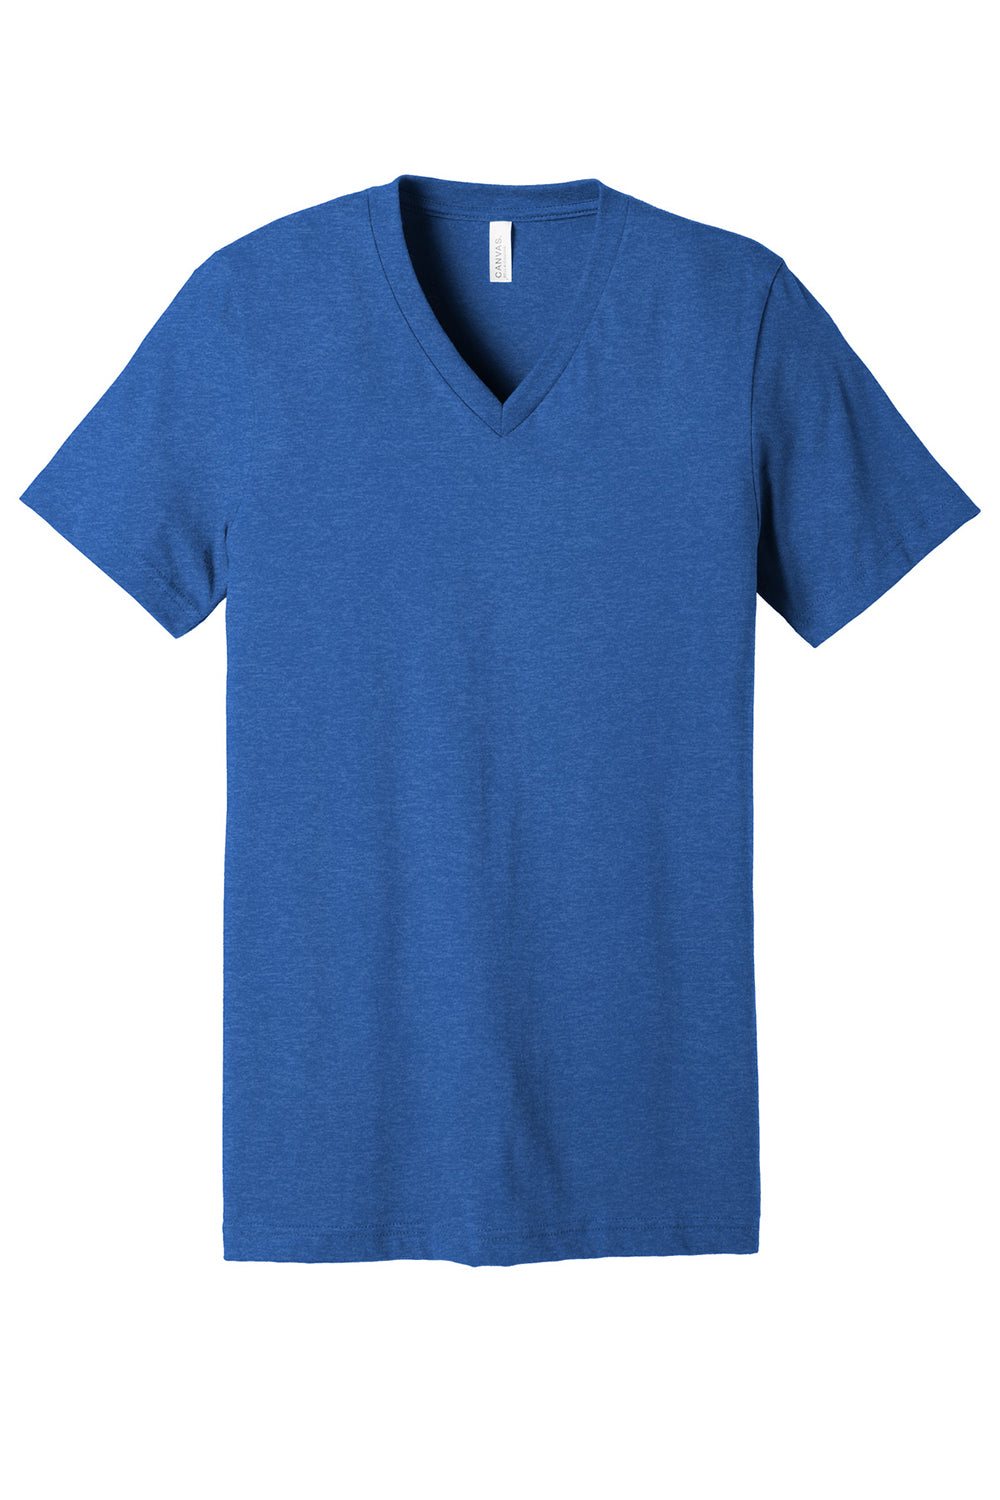 Bella + Canvas BC3005CVC Mens CVC Short Sleeve V-Neck T-Shirt Heather True Royal Blue Flat Front